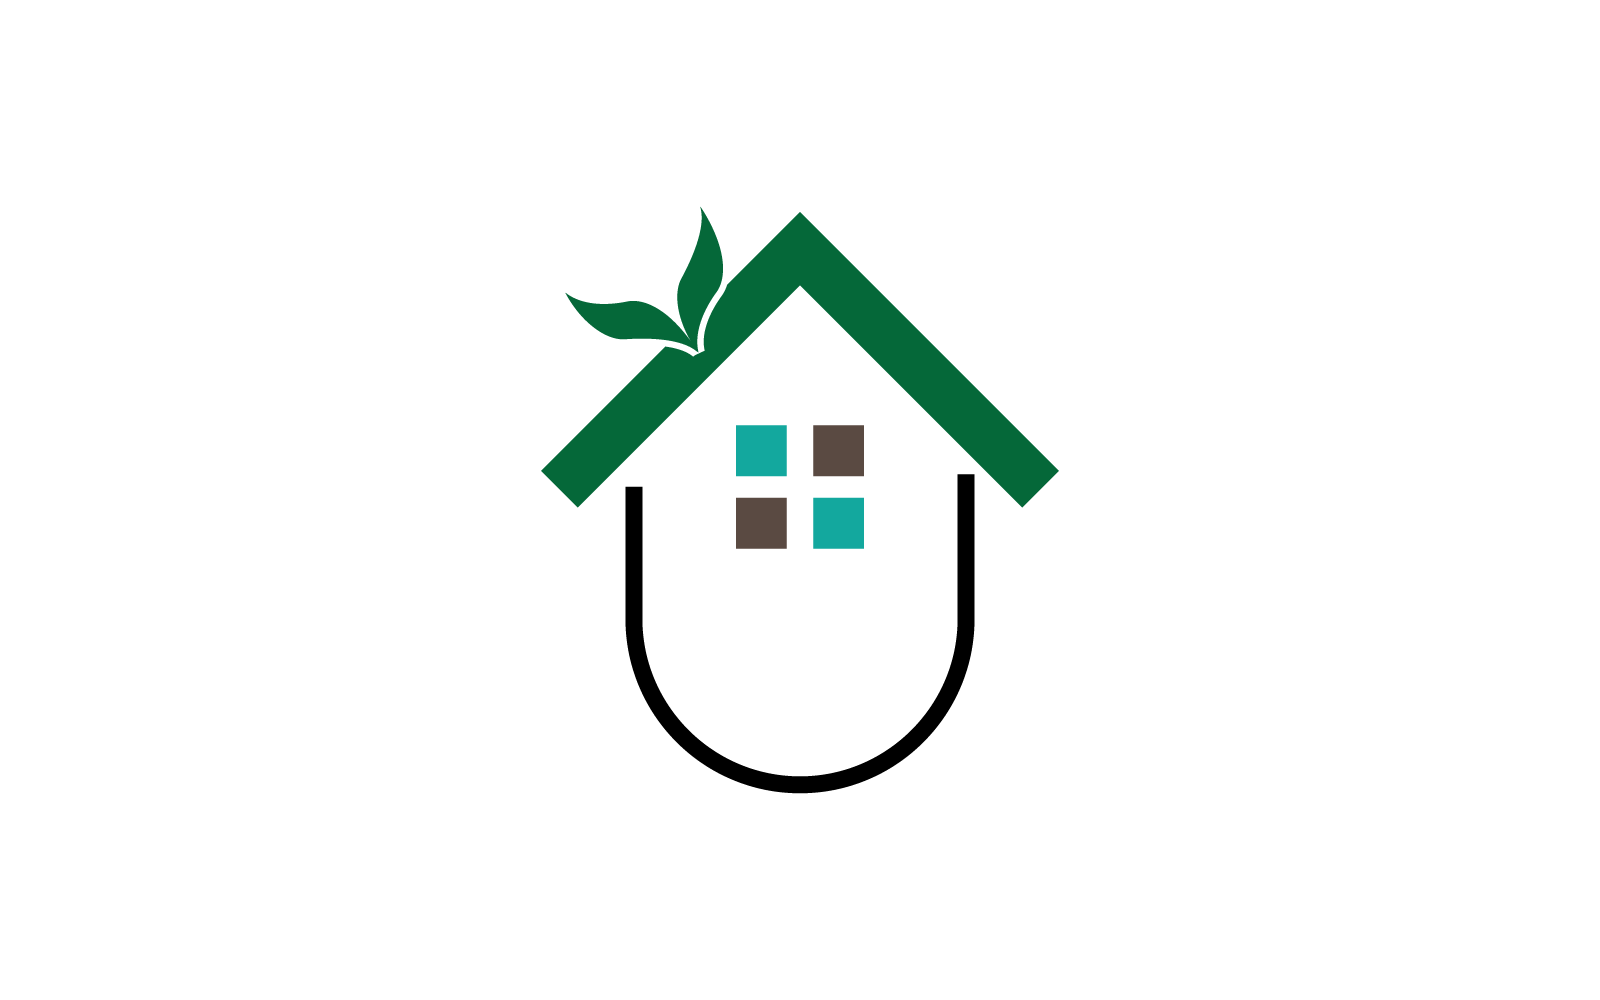 Green House logo design vektor sablon